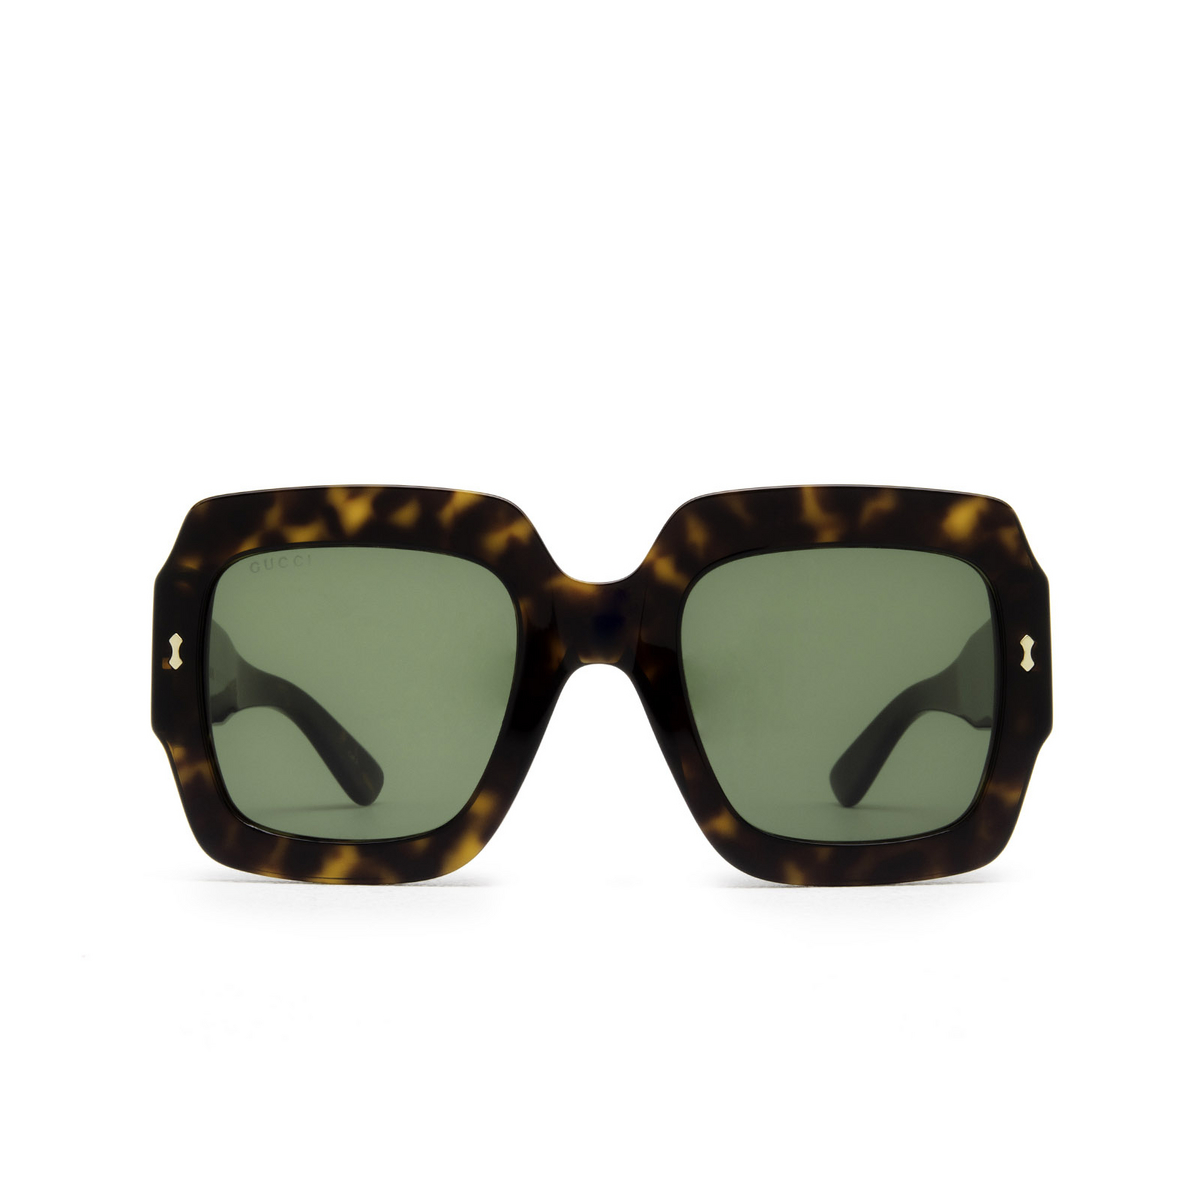 Gucci® Square Sunglasses: GG1111S color Havana 002 - front view.